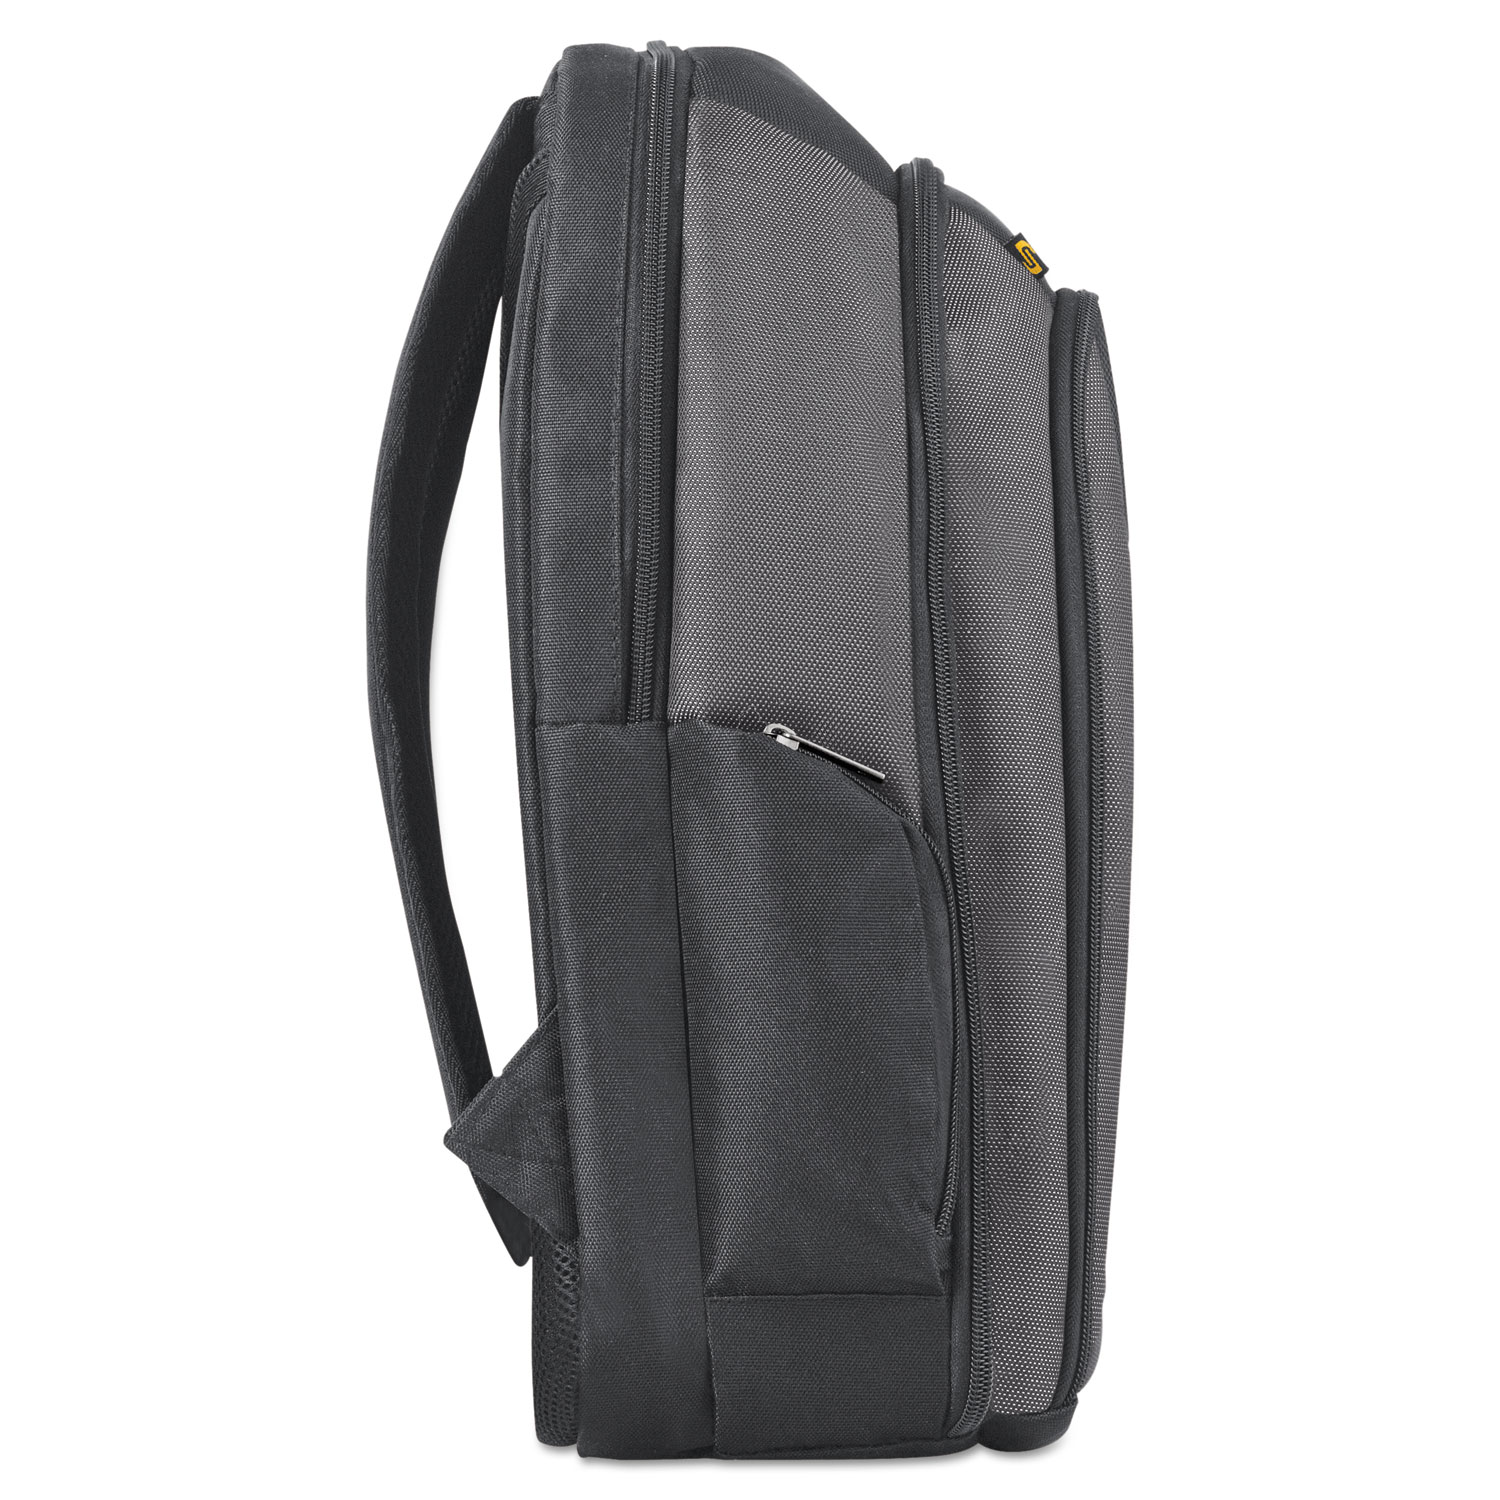 Pro CheckFast Backpack, 16, 13 3/4 x 6 1/2 x 17 3/4, Black